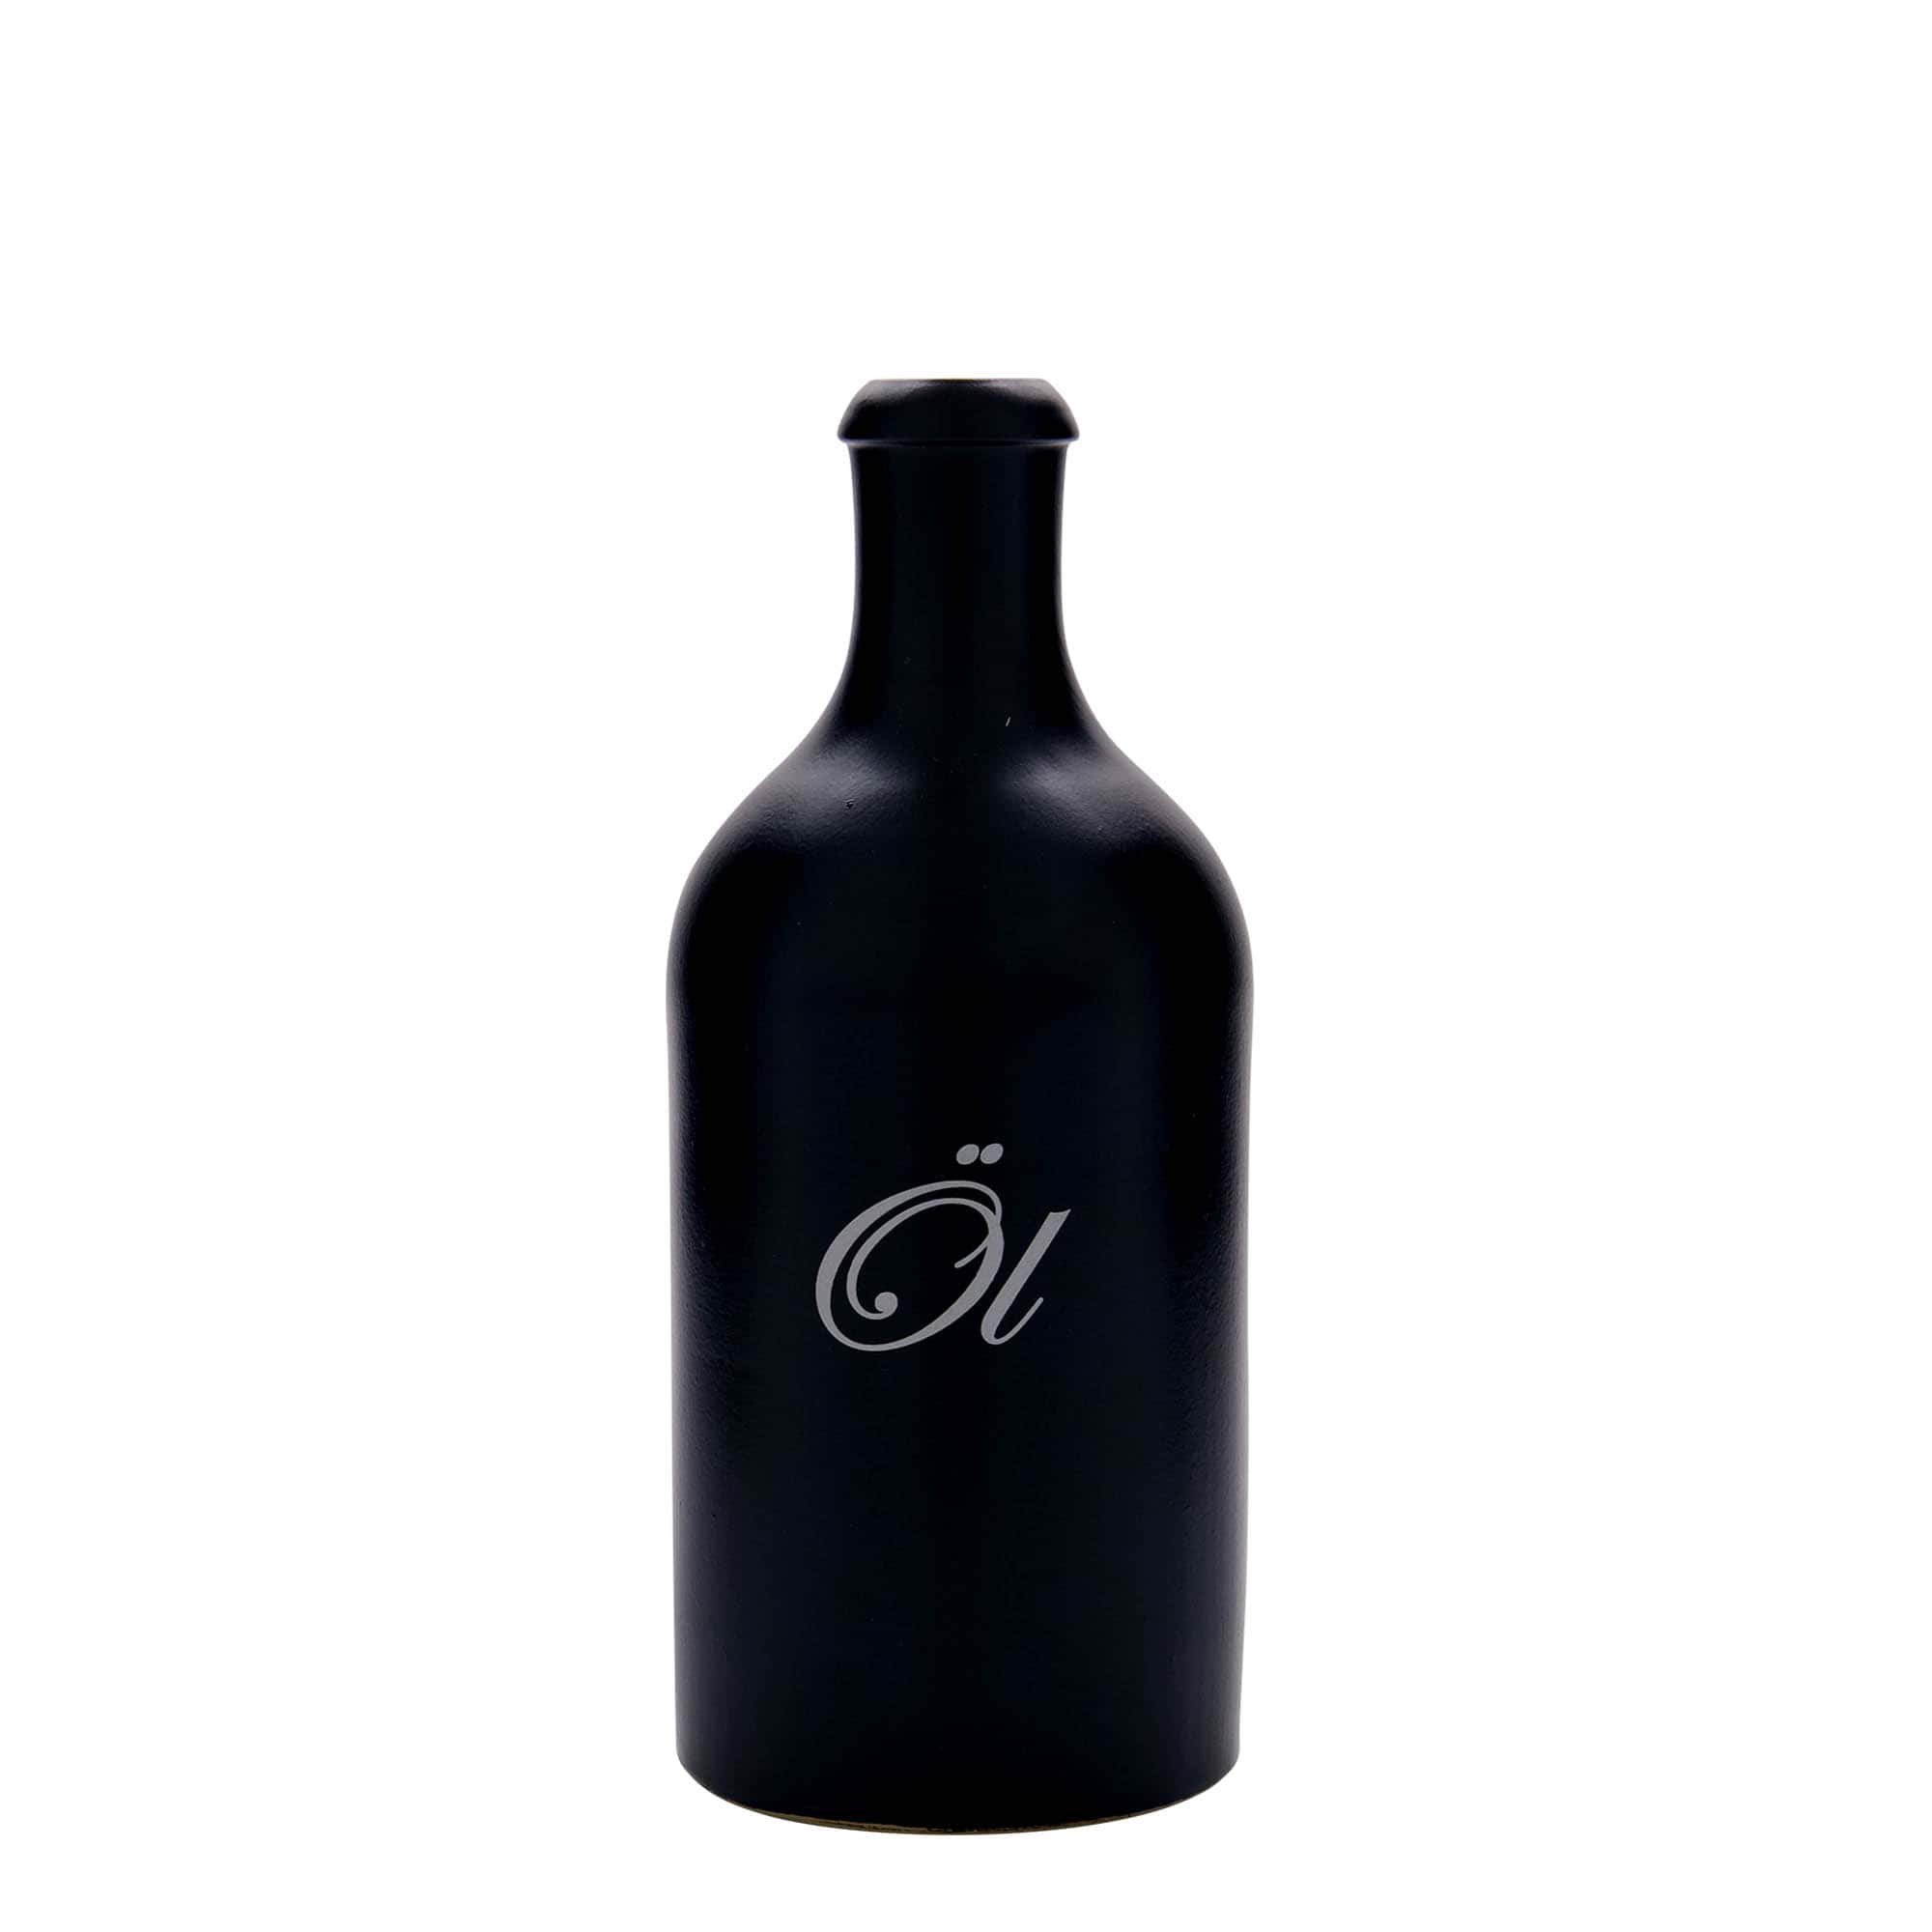 500 ml earthen jug, print: oil, stoneware, black, closure: cork